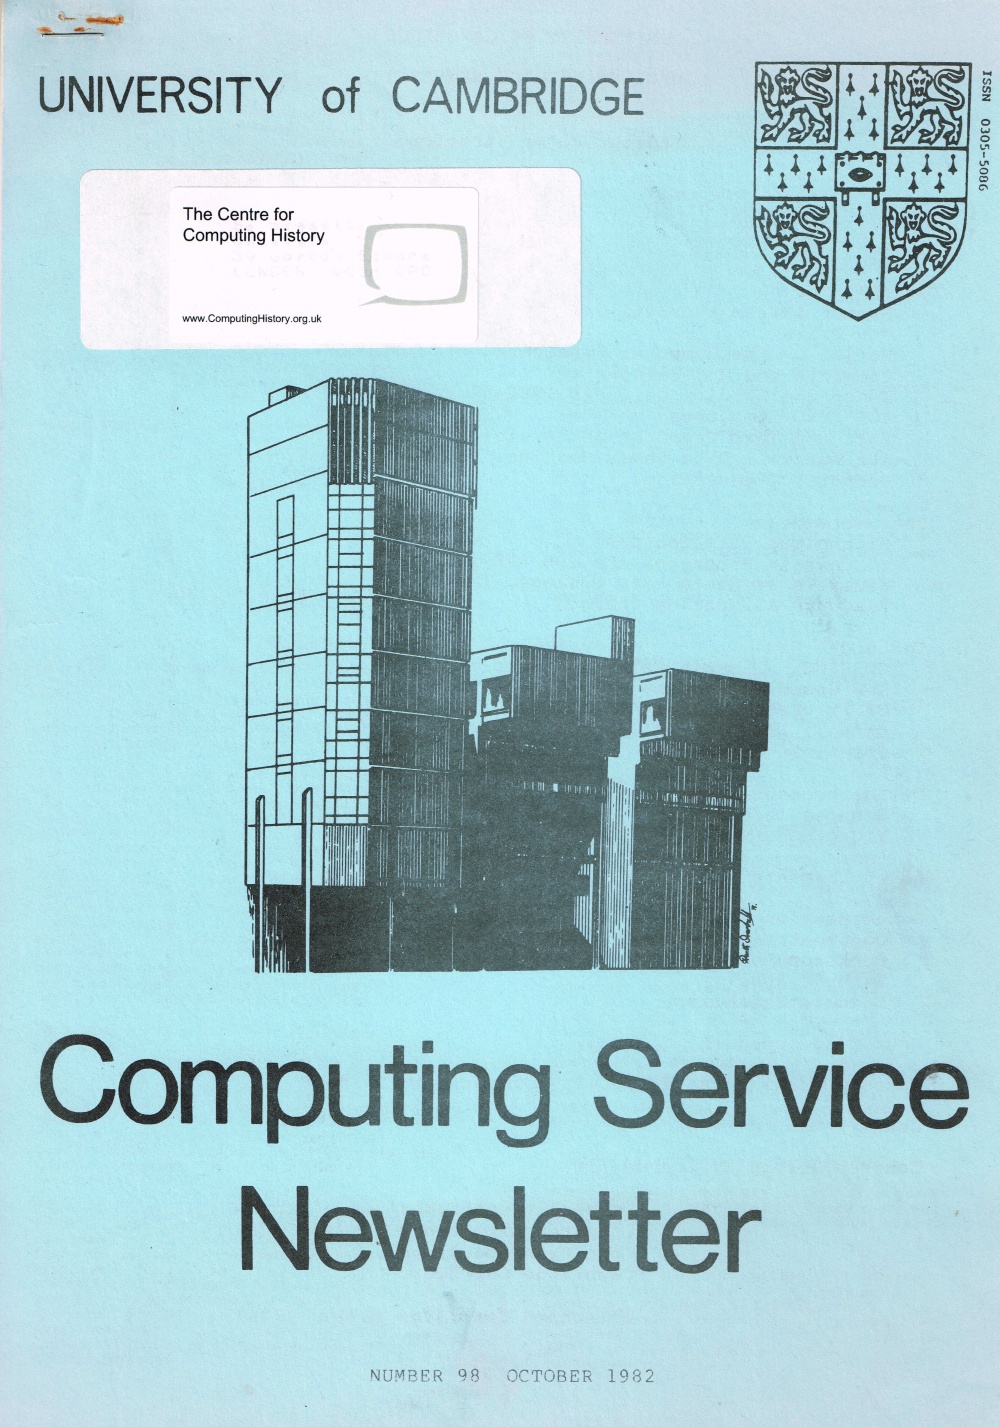 Article: University of Cambridge Computing Service October 1982 Newsletter 98